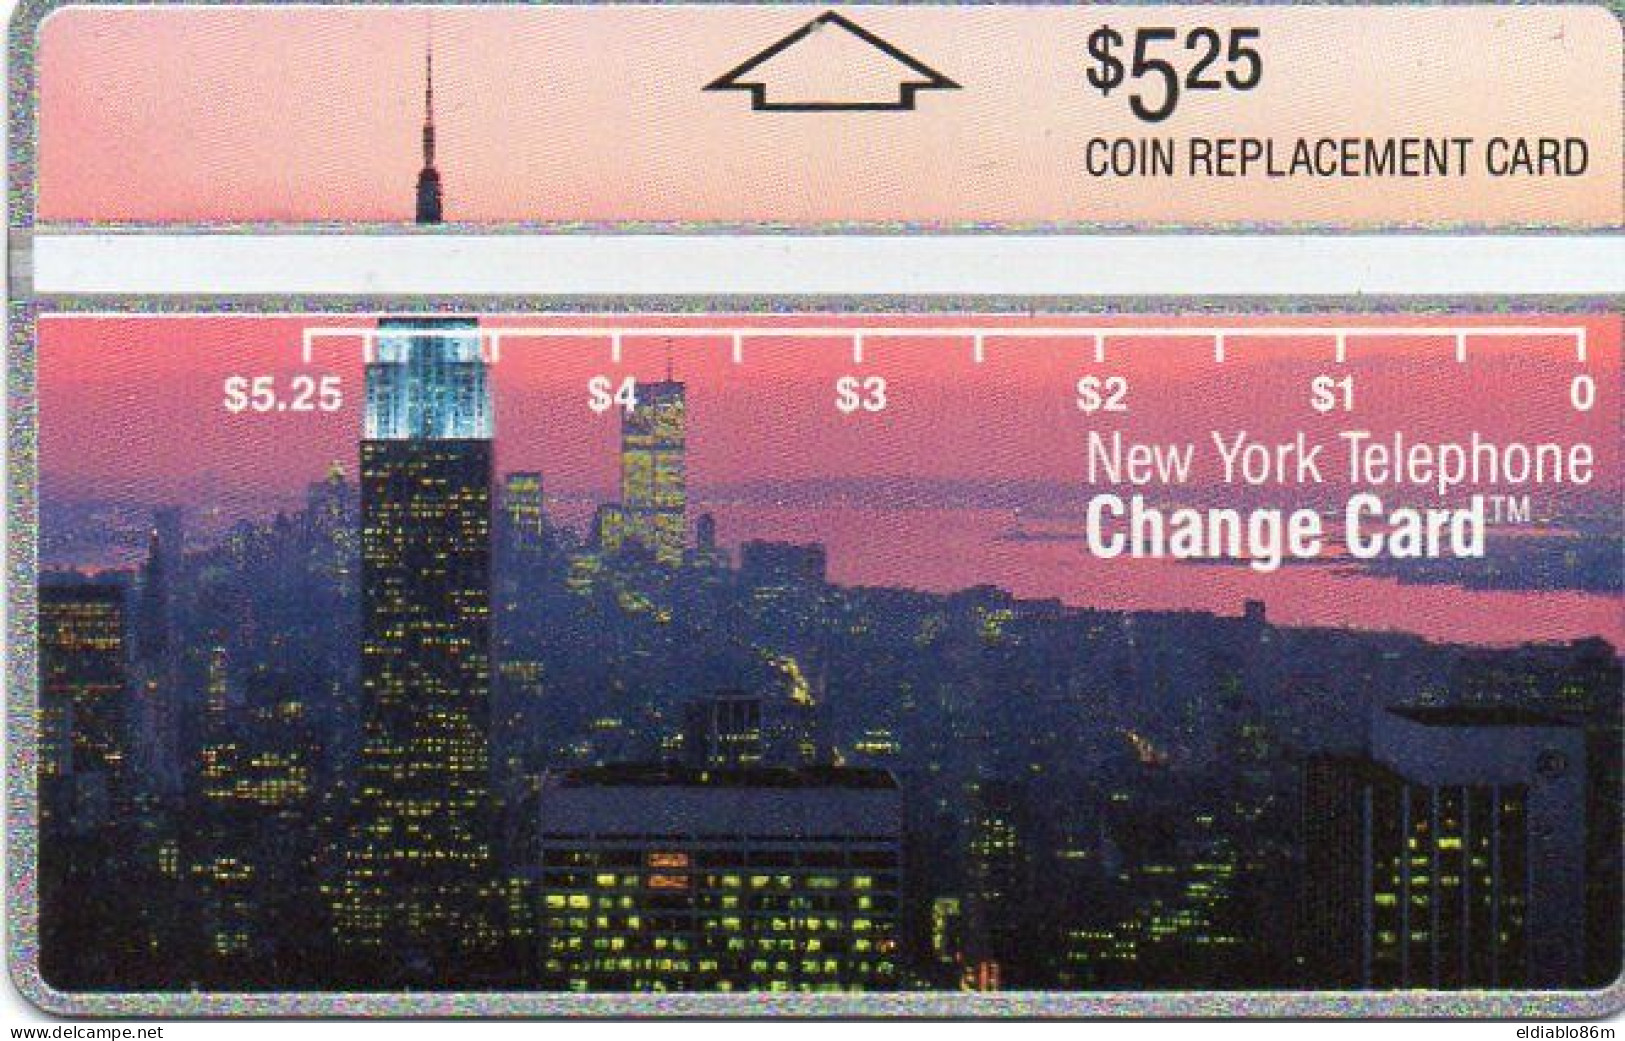 UNITED STATES - L&G - NYNEX - NEW YORK SKYLINE - 210B - MINT - [1] Hologrammkarten (Landis & Gyr)